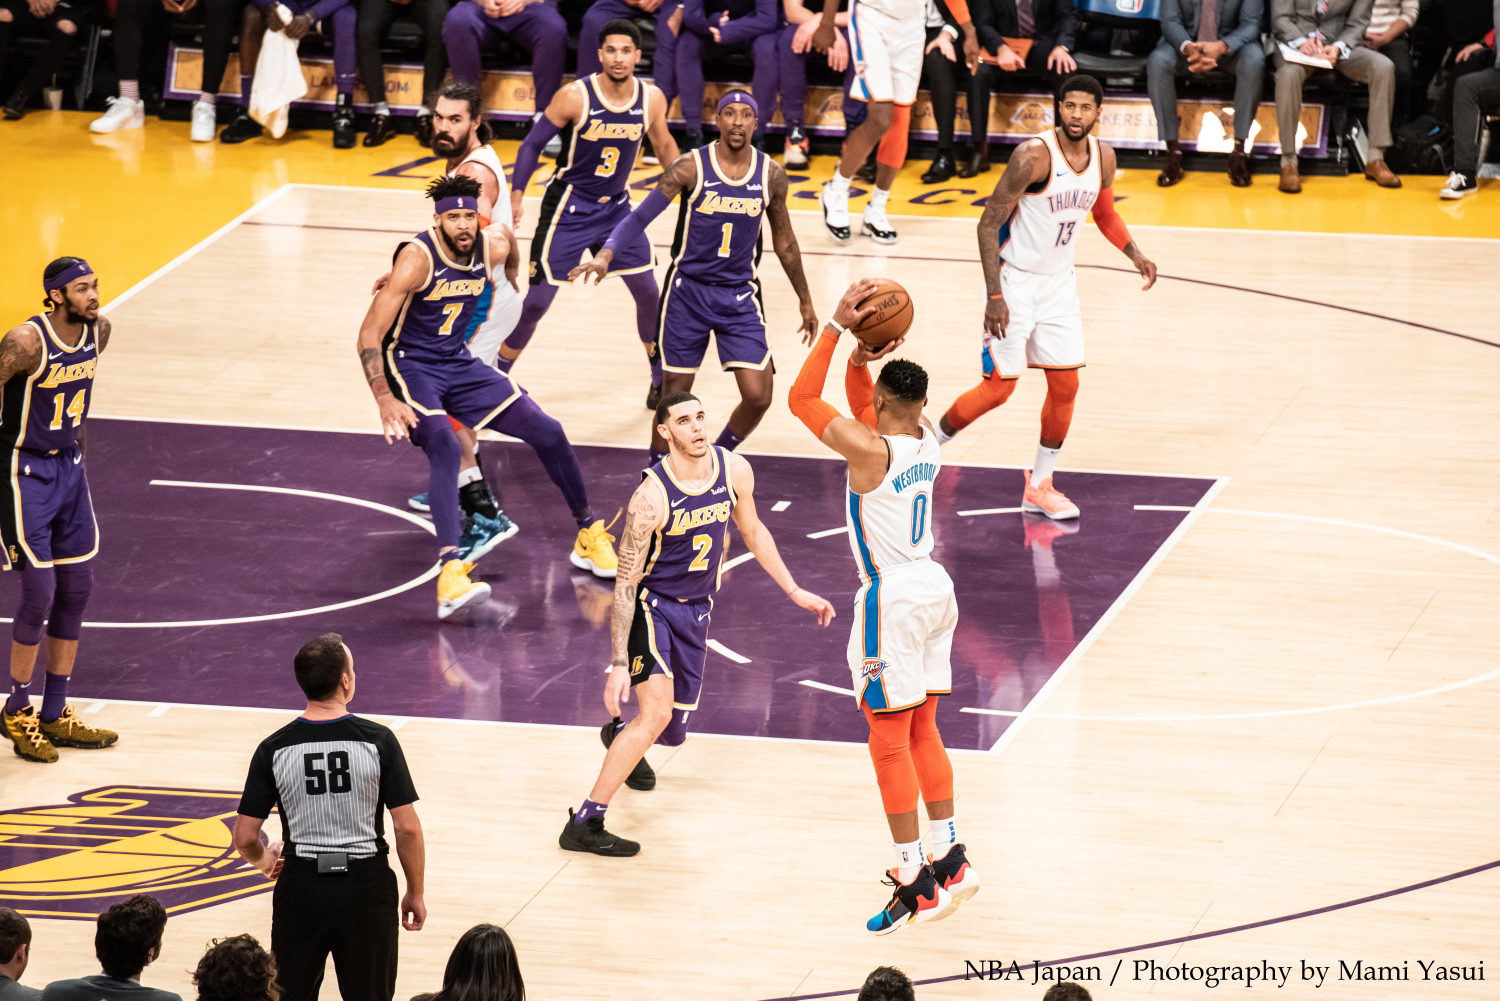 MSP_0492 Thunder vs Lakers, Photo by Mami Yasui/NBA Japan